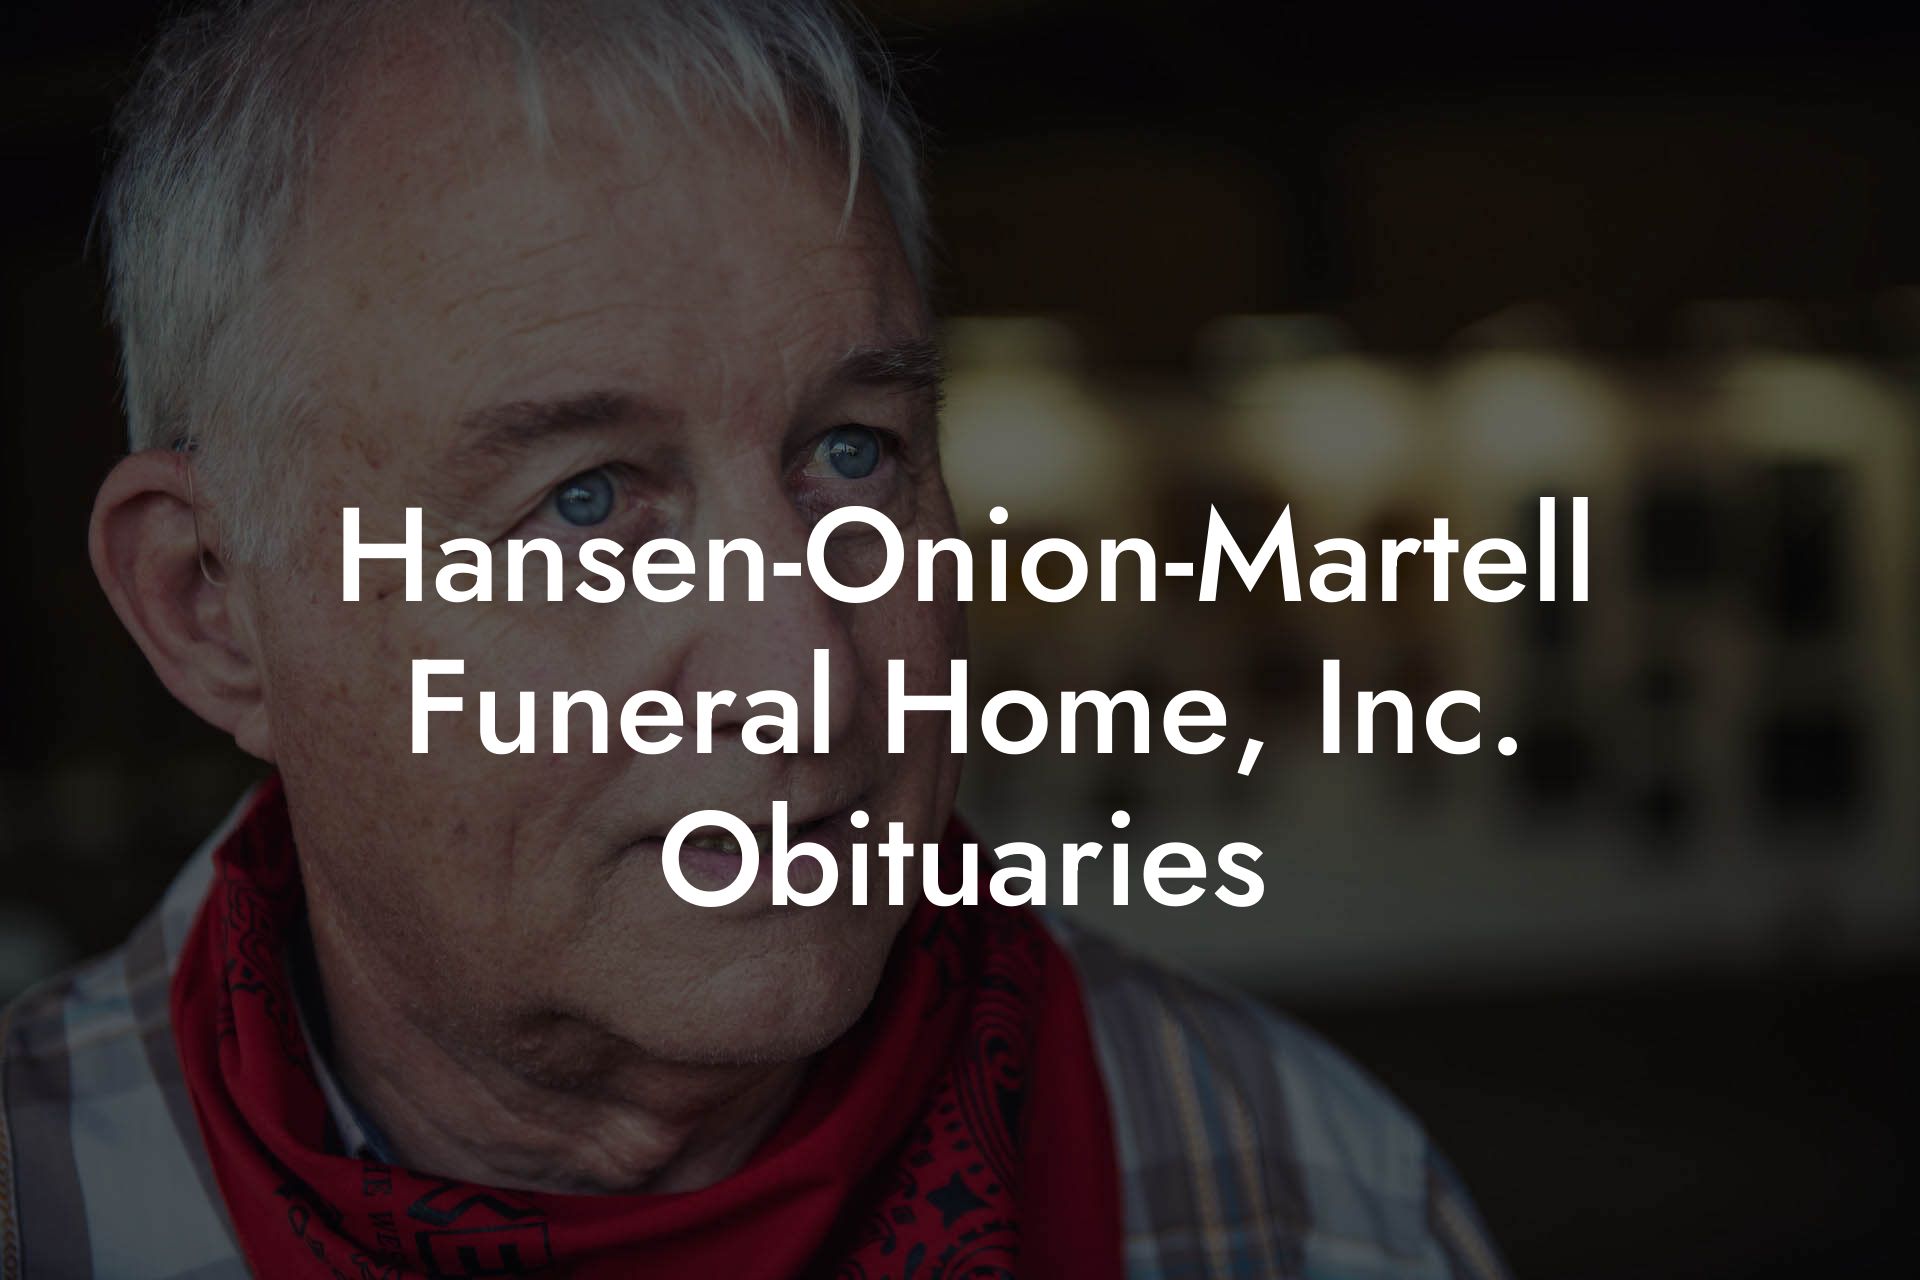 Hansen-Onion-Martell Funeral Home, Inc. Obituaries